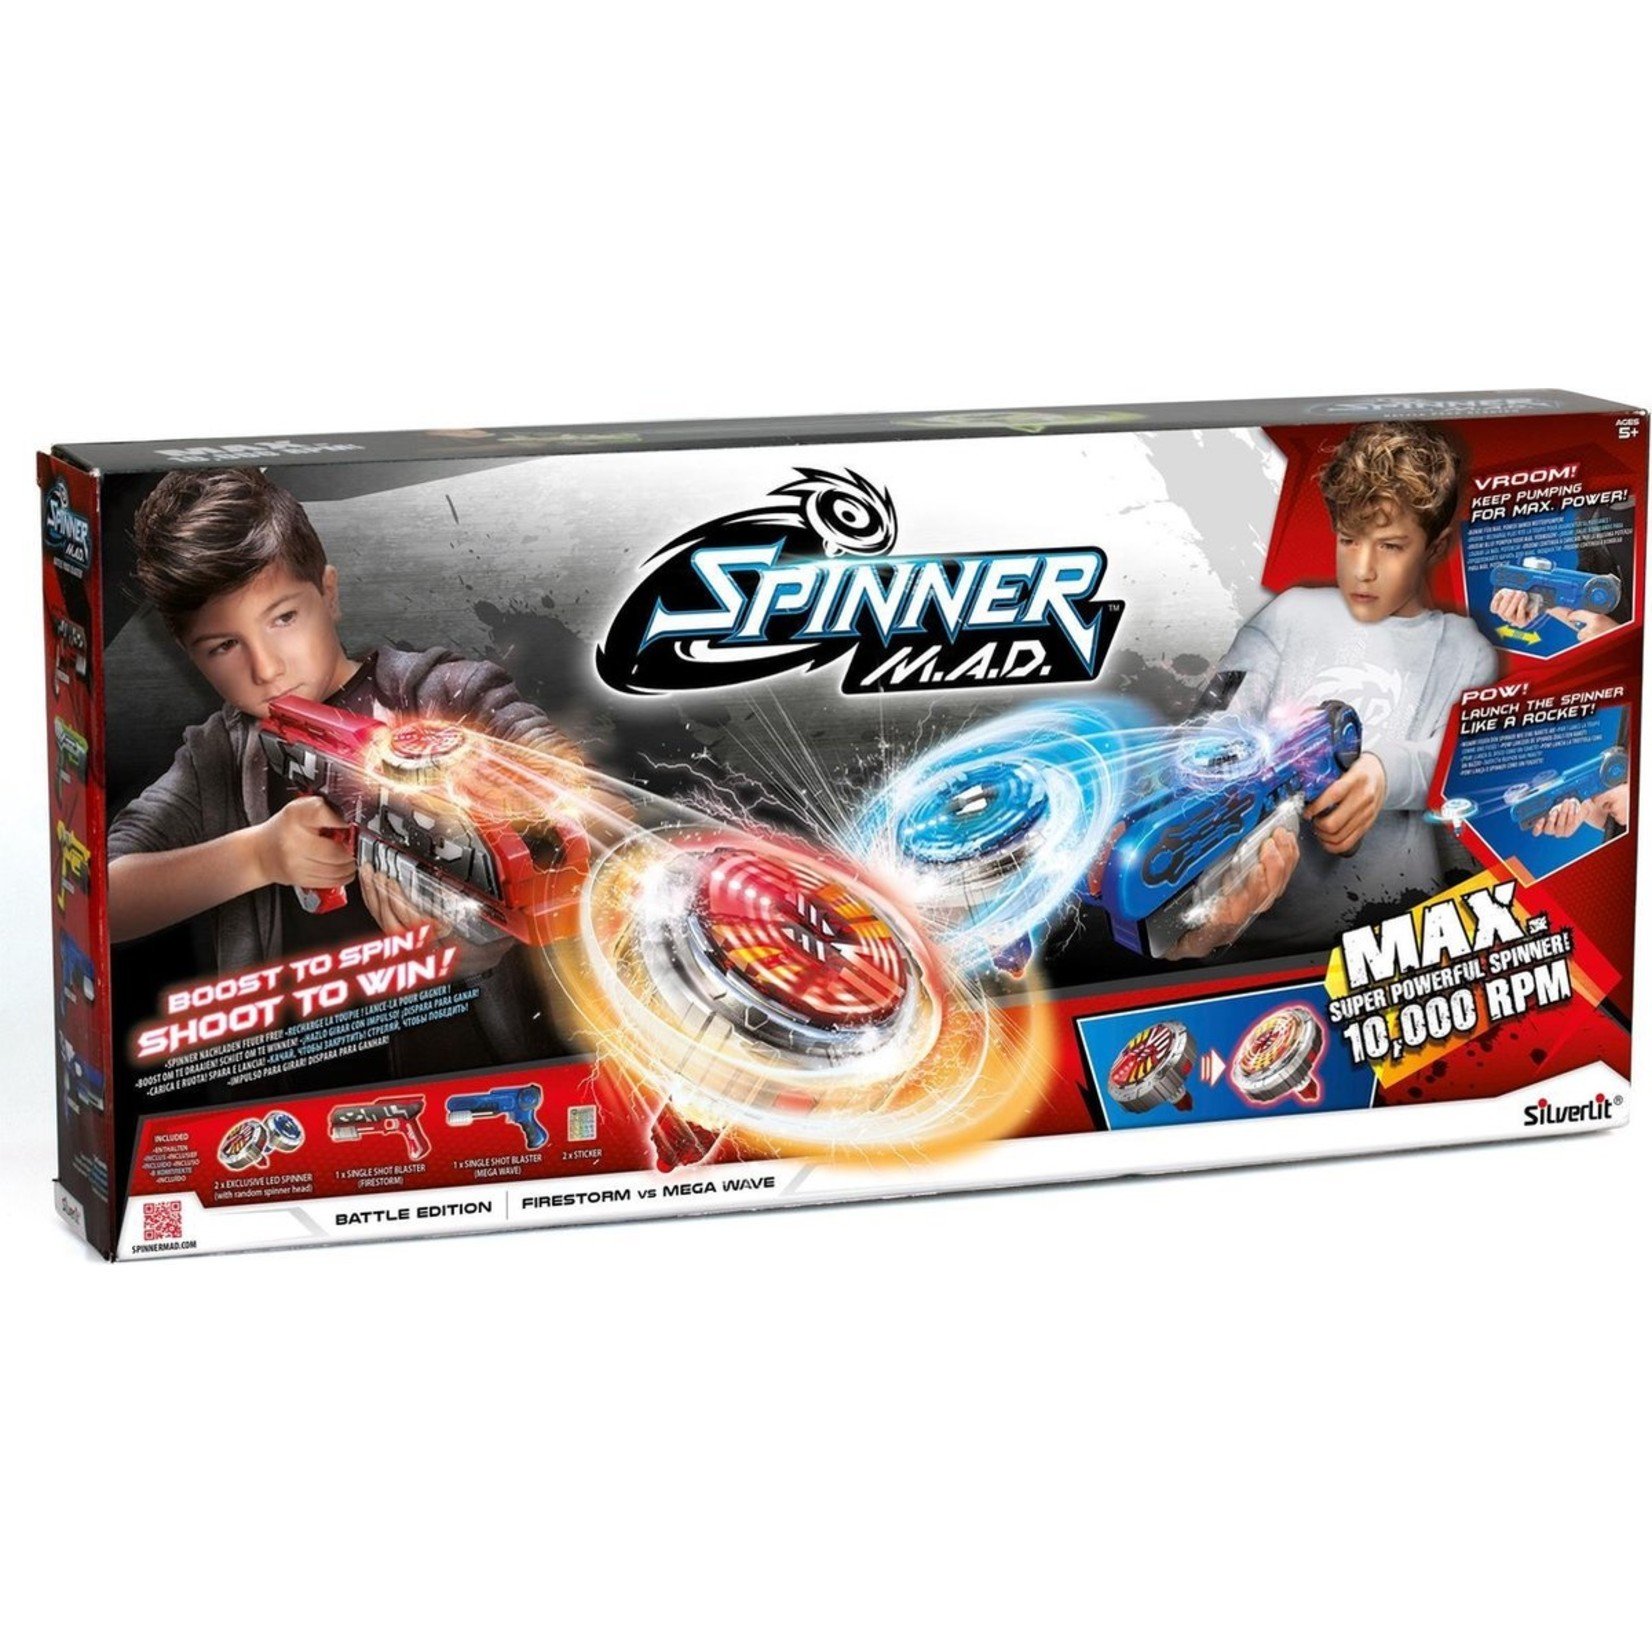 Silverlit Silverlit Spinner Mad Duo Battle Pack